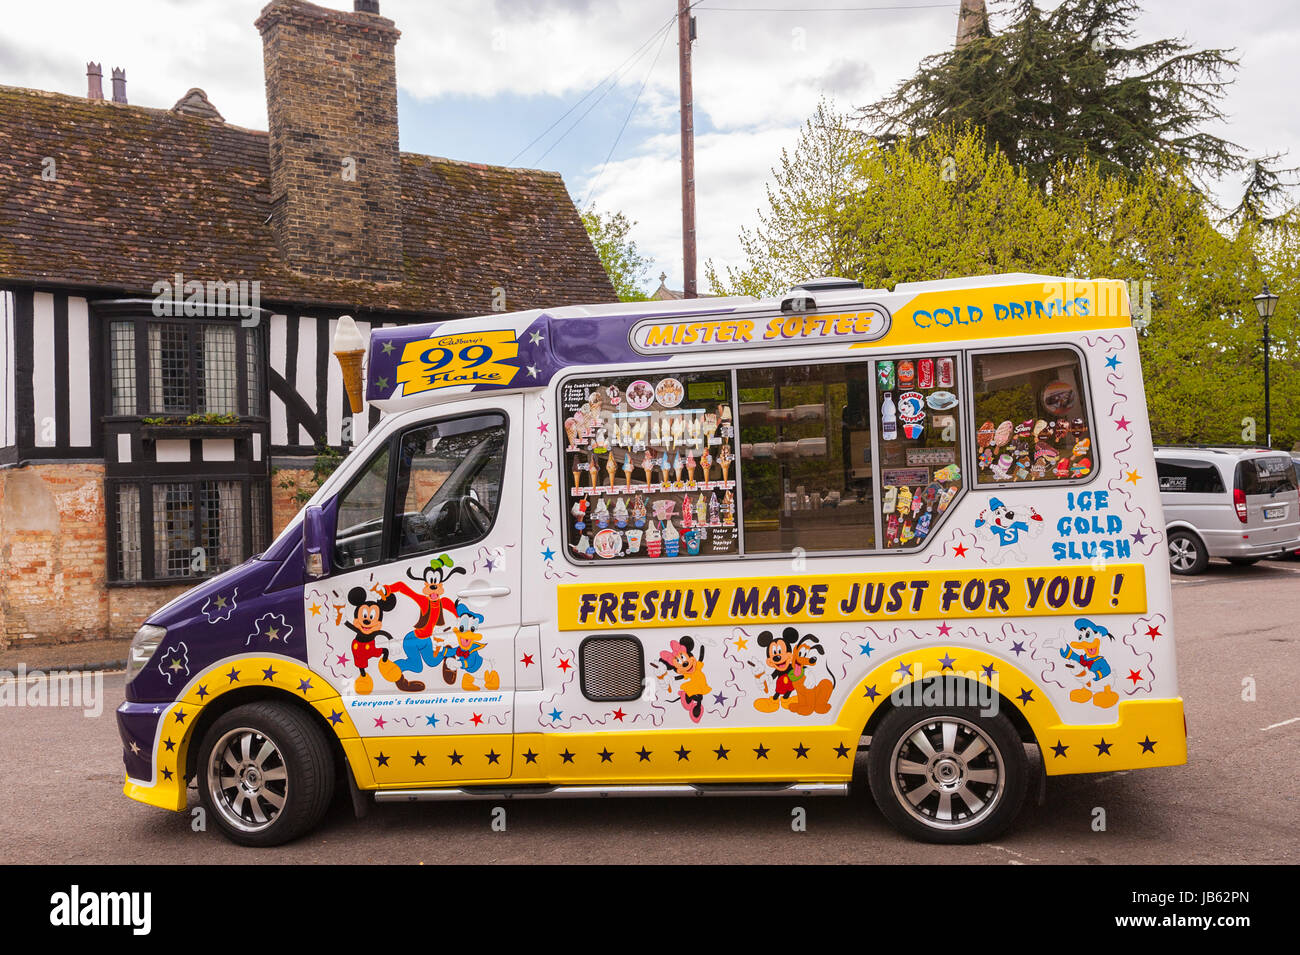 A Mister Softee ice cream van in Ely 